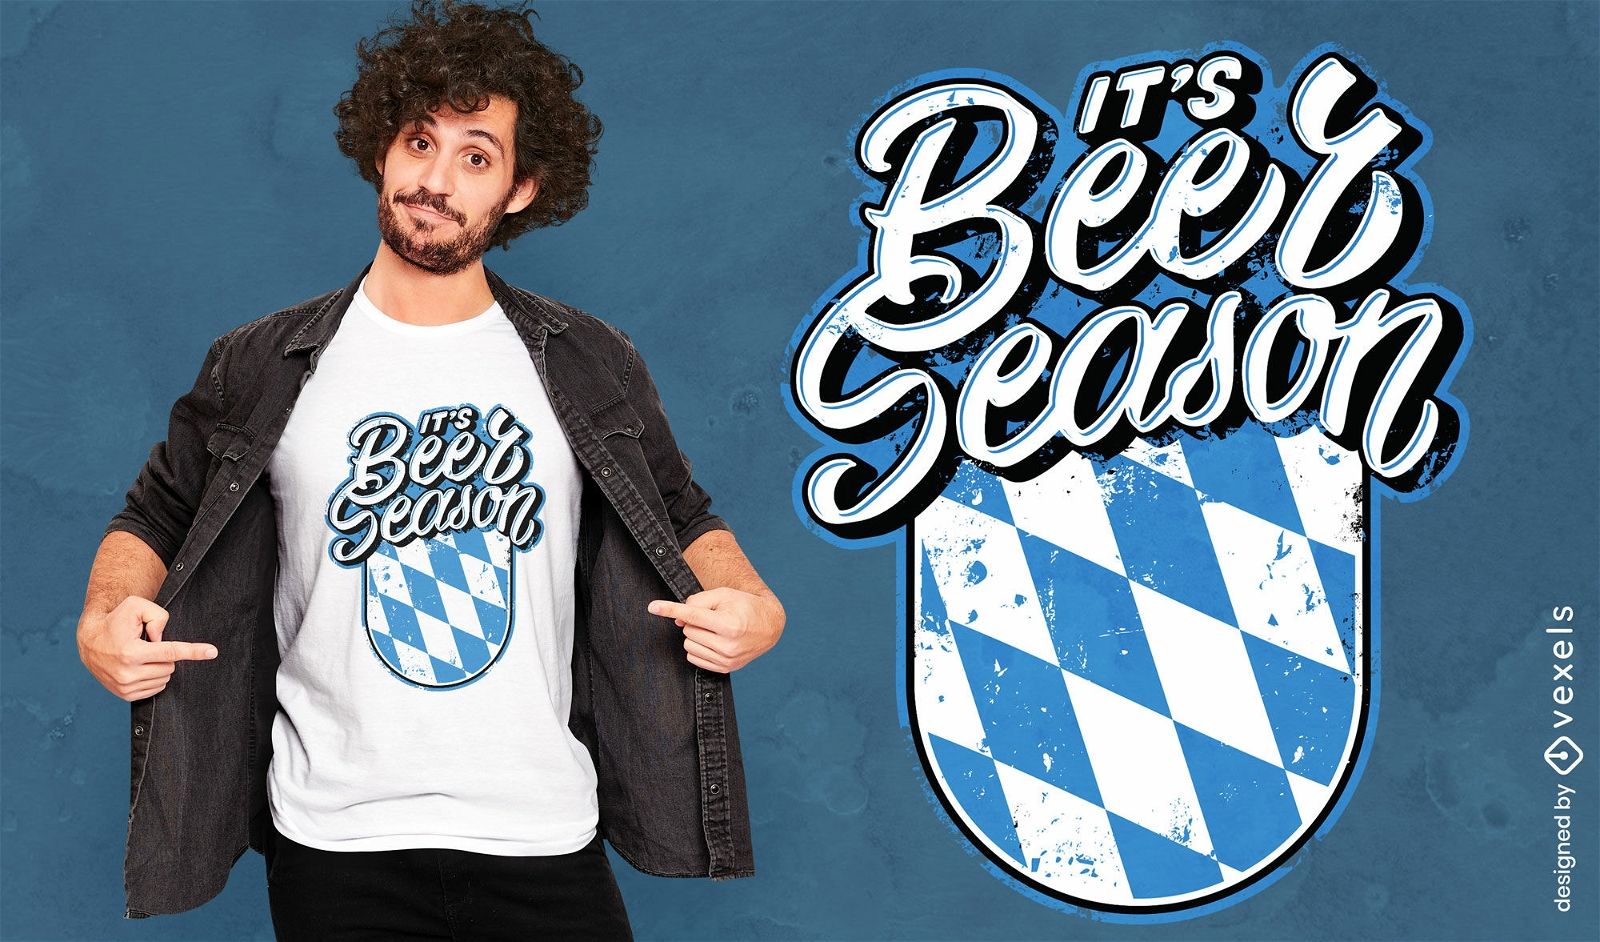 Beer season Oktoberfest quote t-shirt design